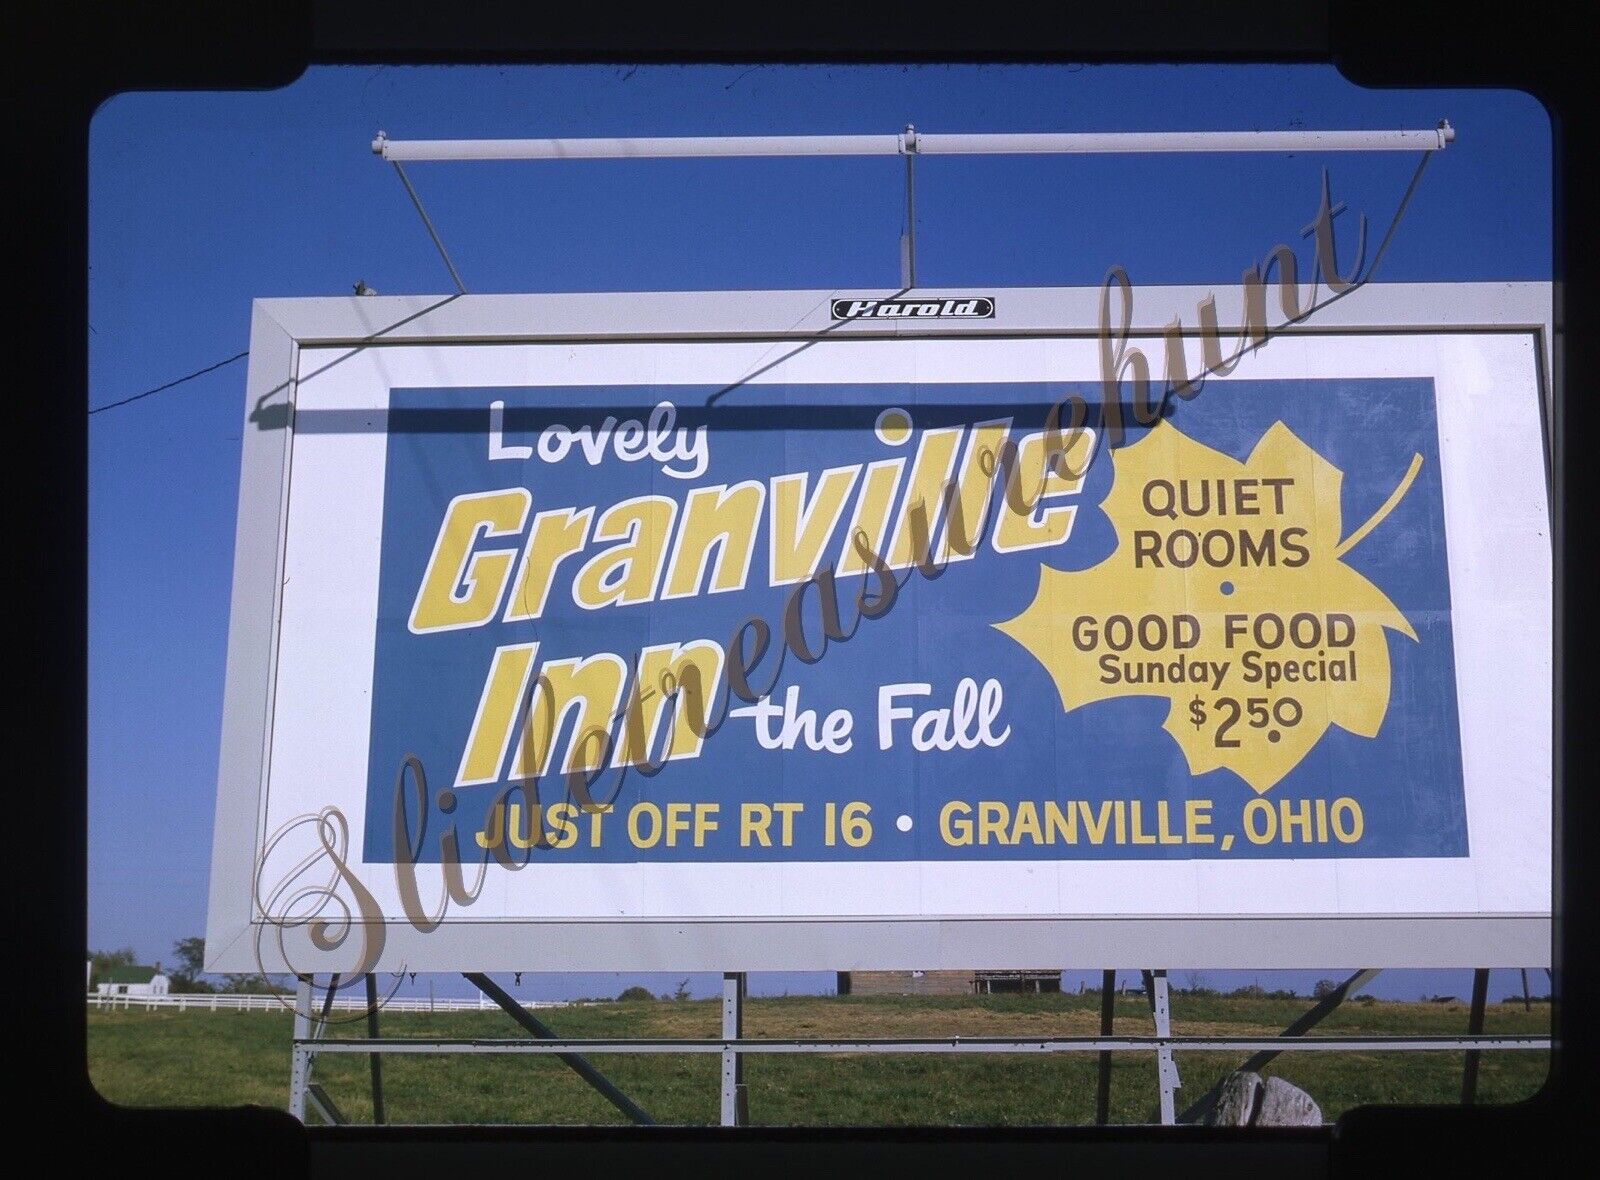 Granville Inn Ohio Hotel Motel Sign Billboard 1960s 35mm Slide Kodachrome